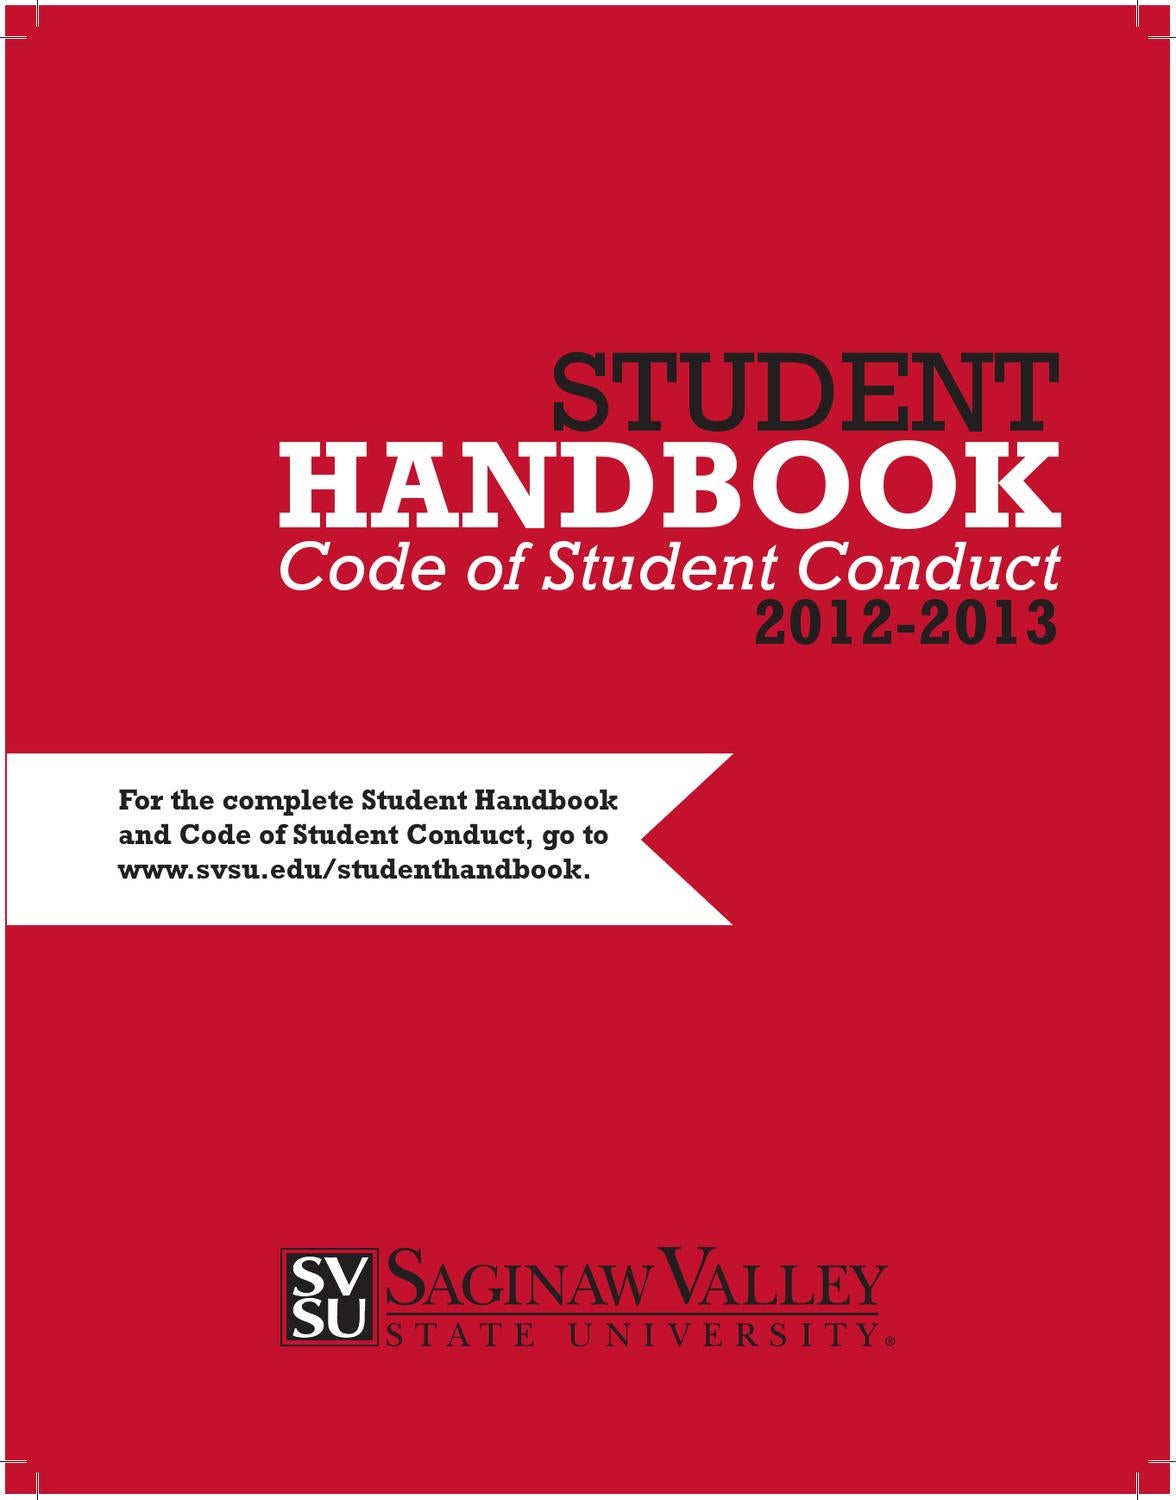 Code of conduct of handbook